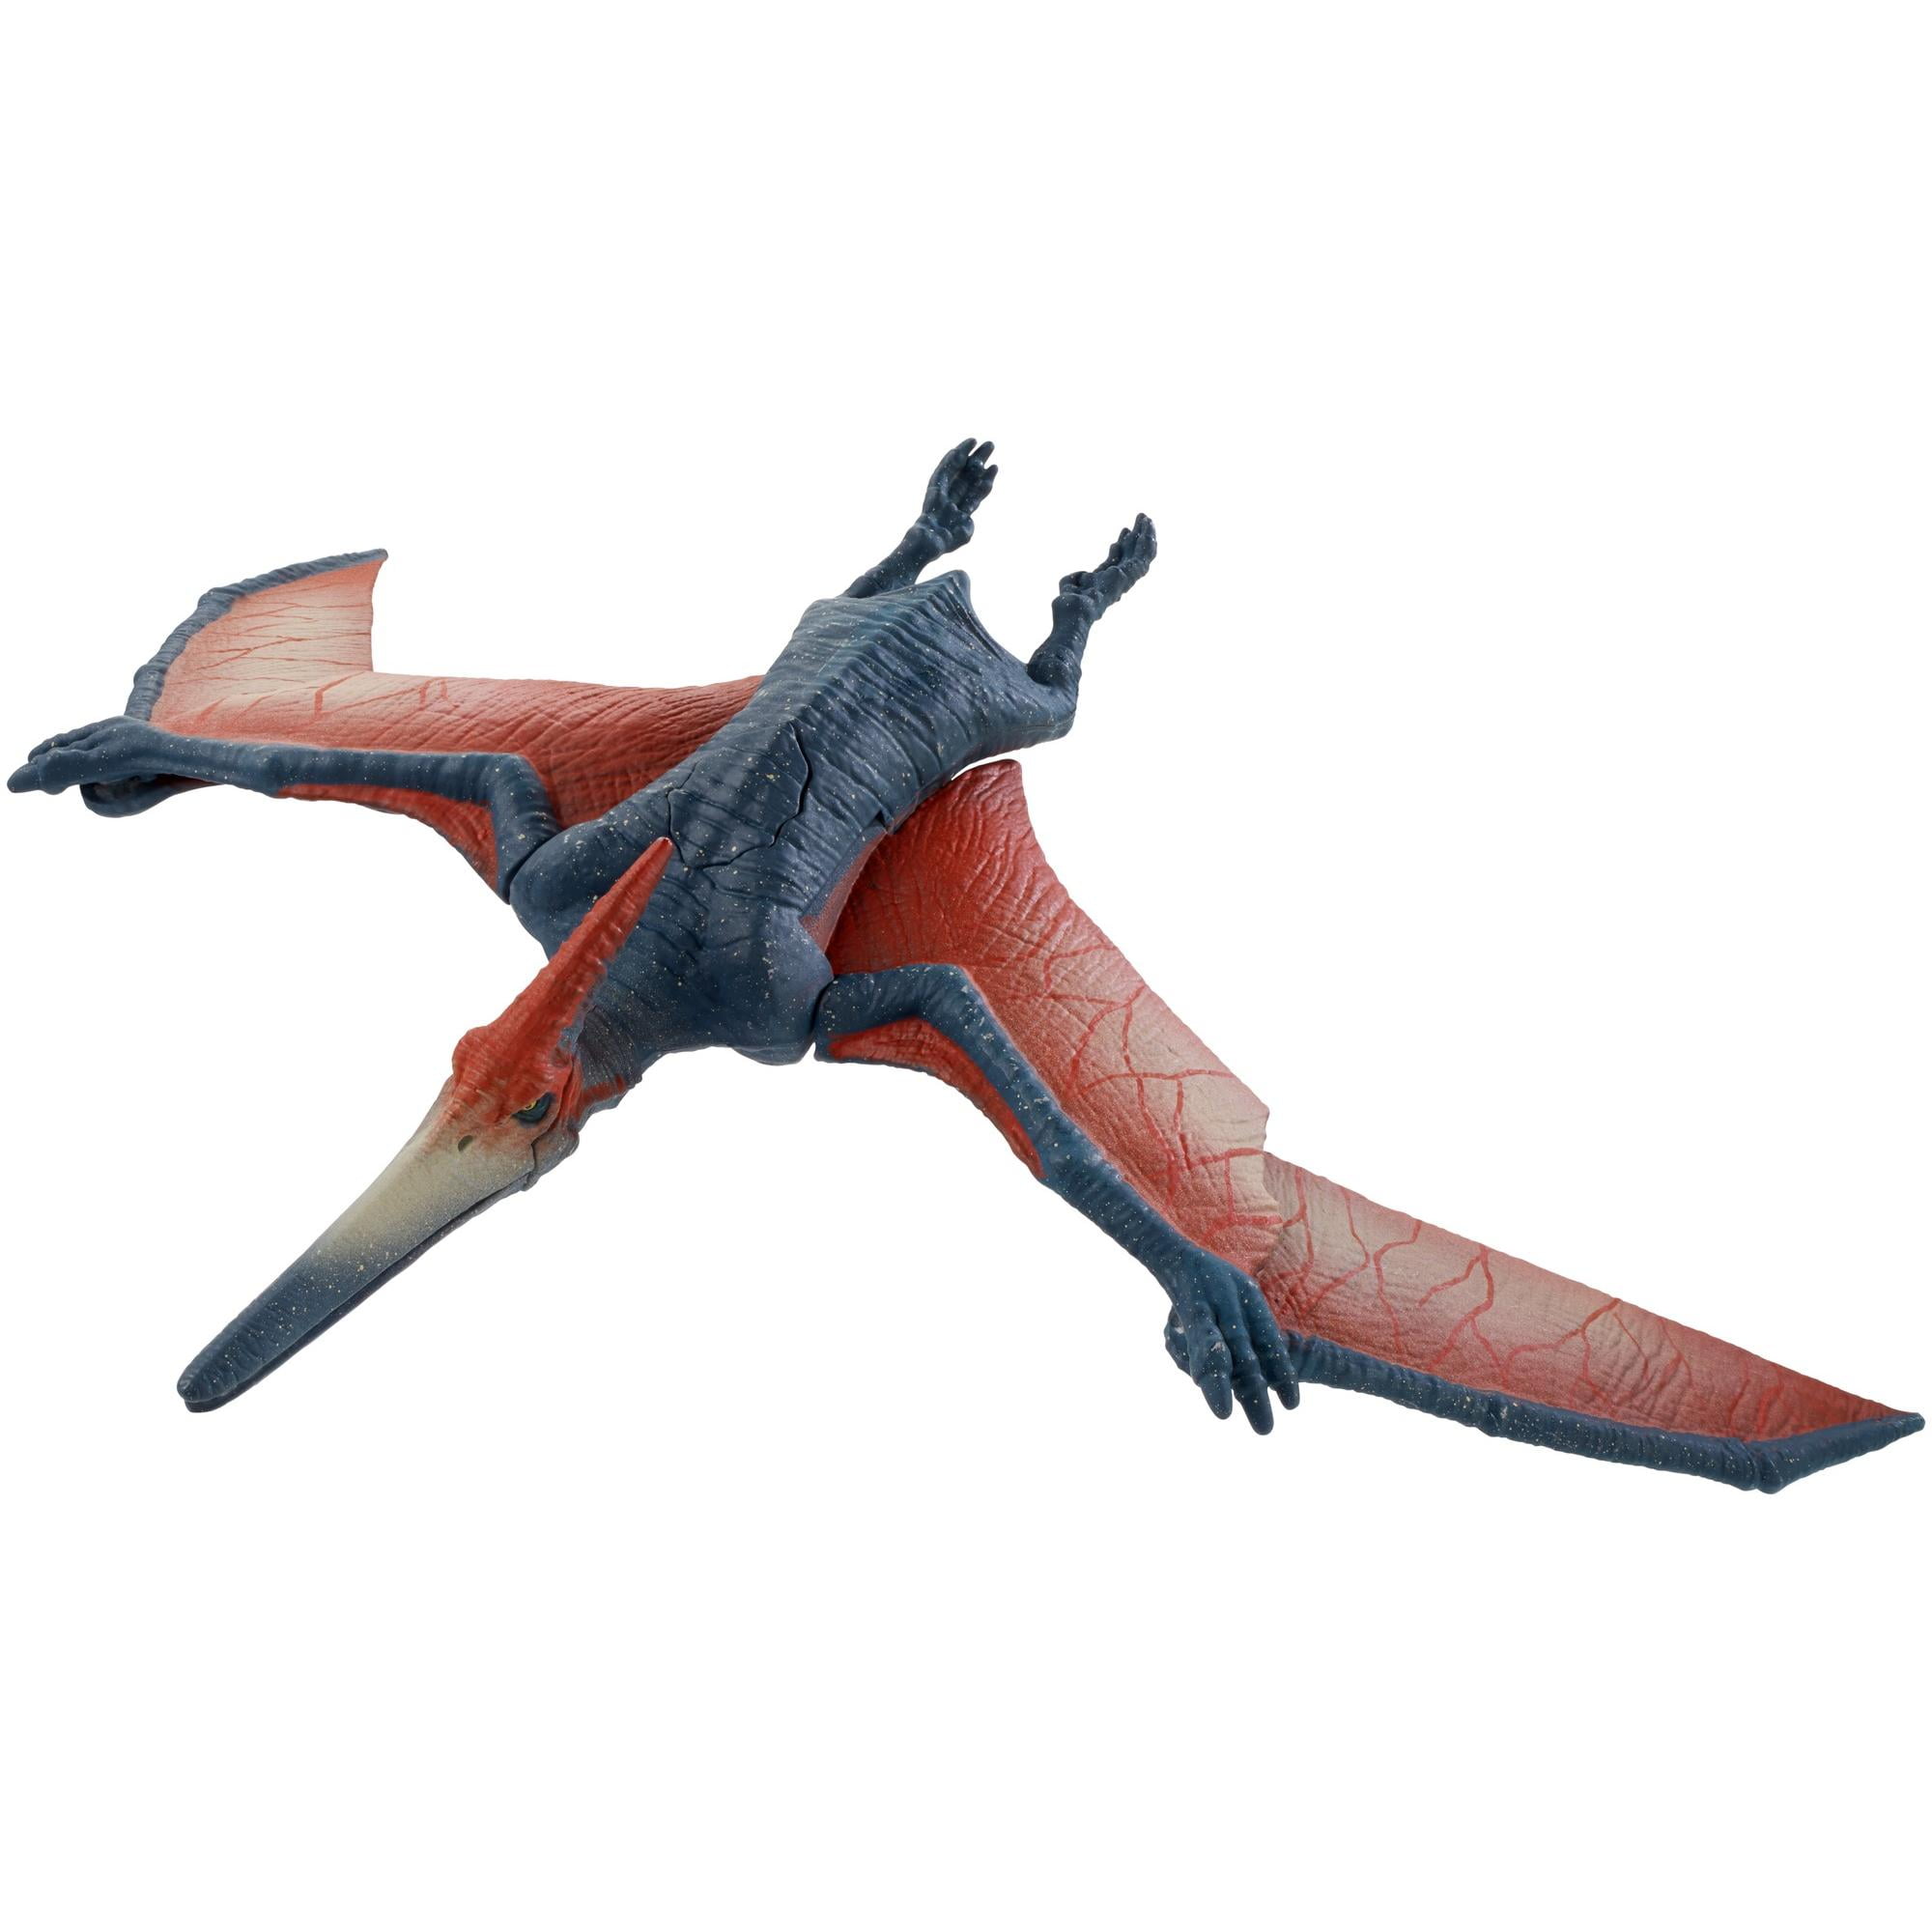 Vitae Jurassic World Dinosaur Pterosauria Animal Modle Figure Toy In Stock 